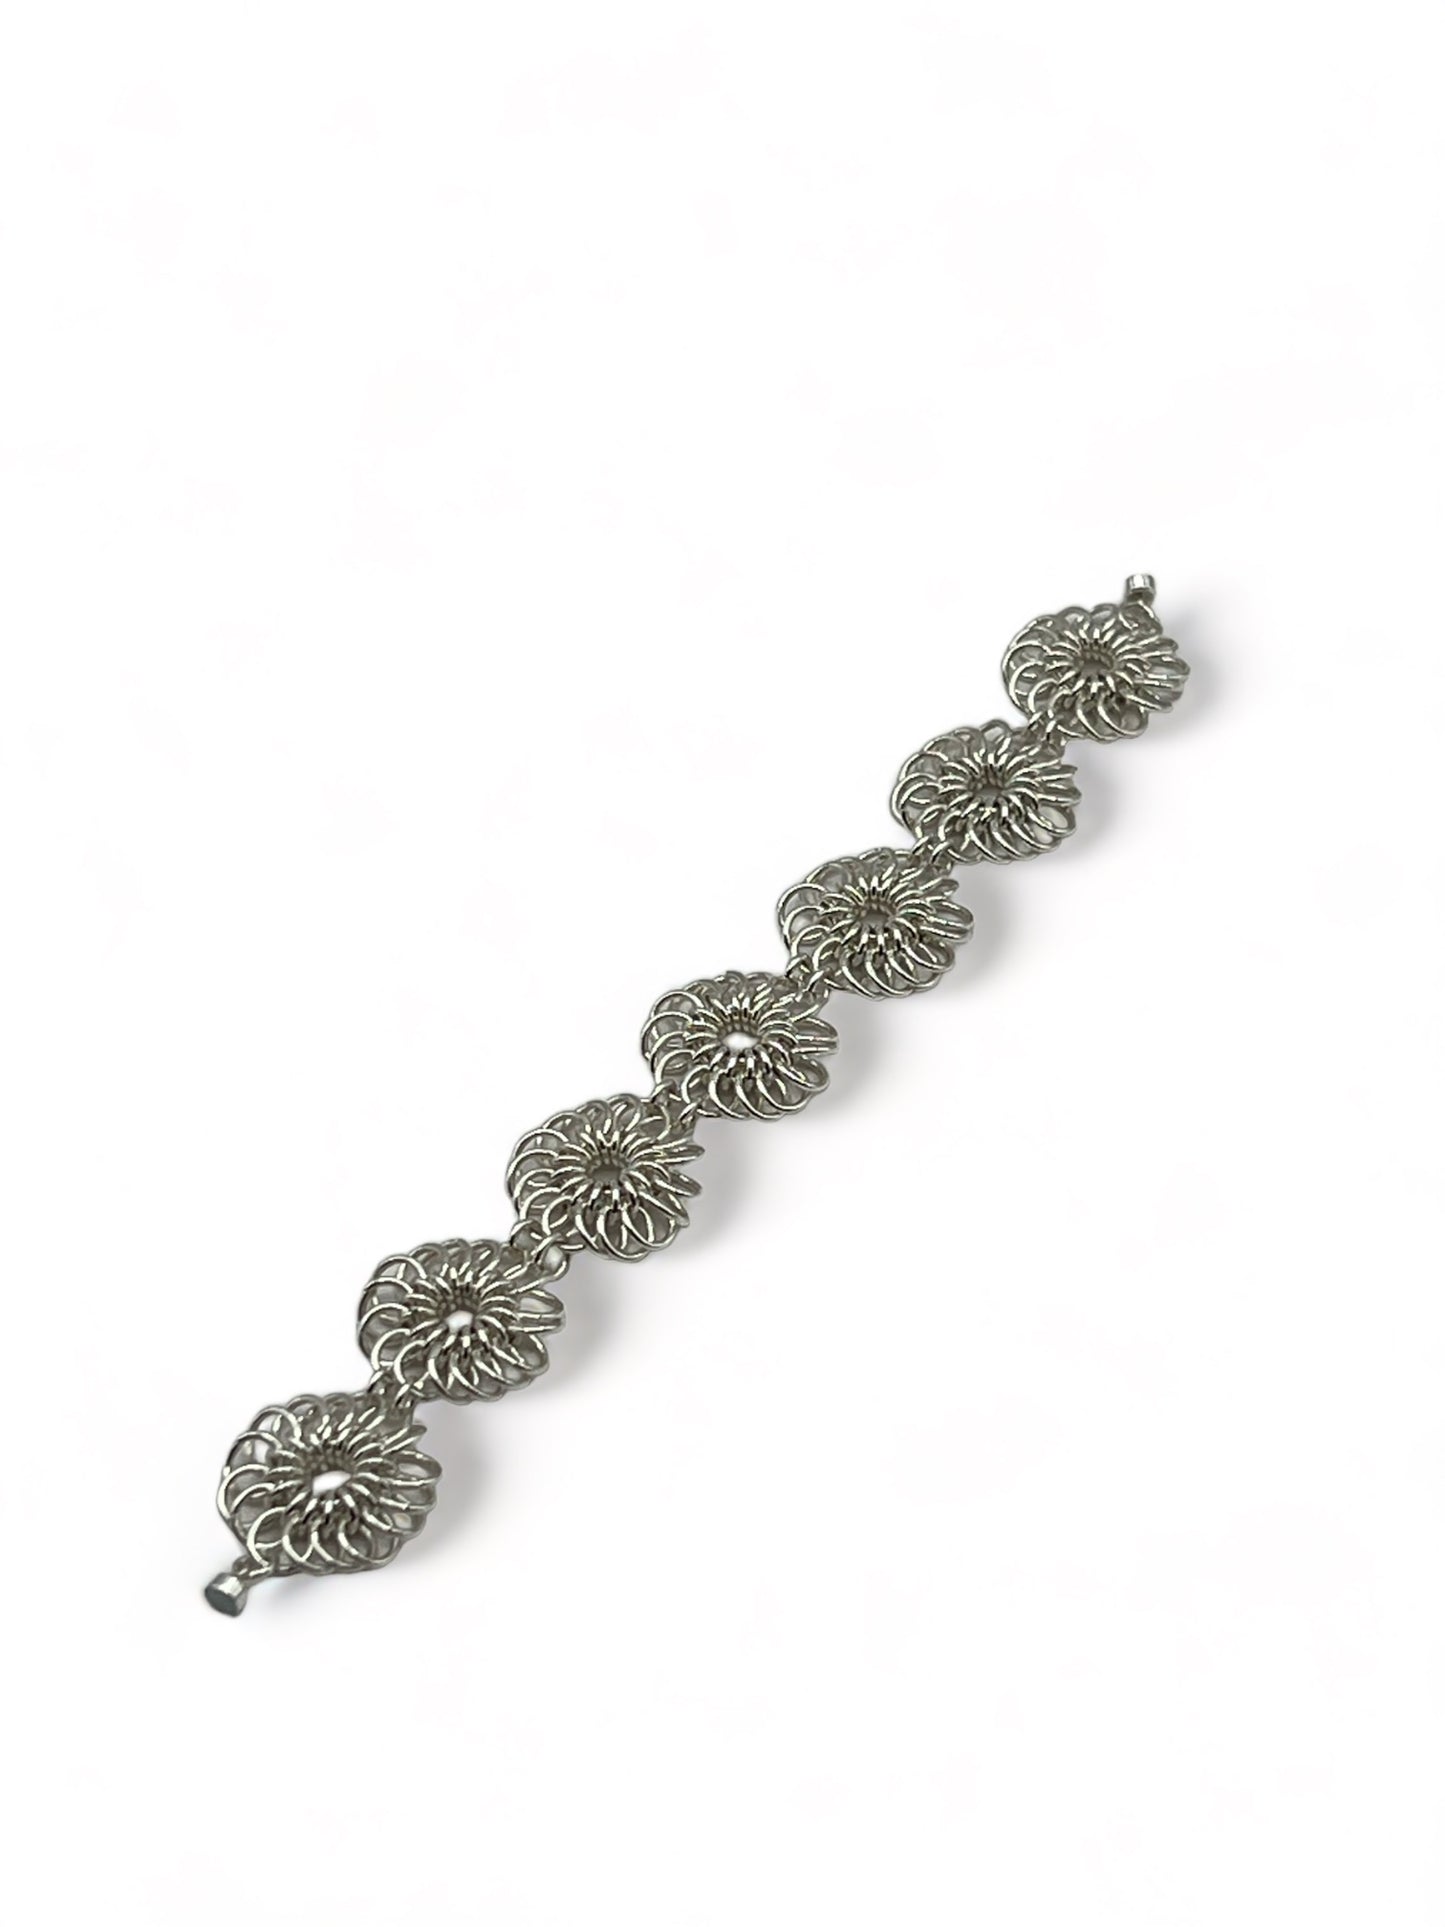 Chrysanthemum Sterling Silver Bracelet